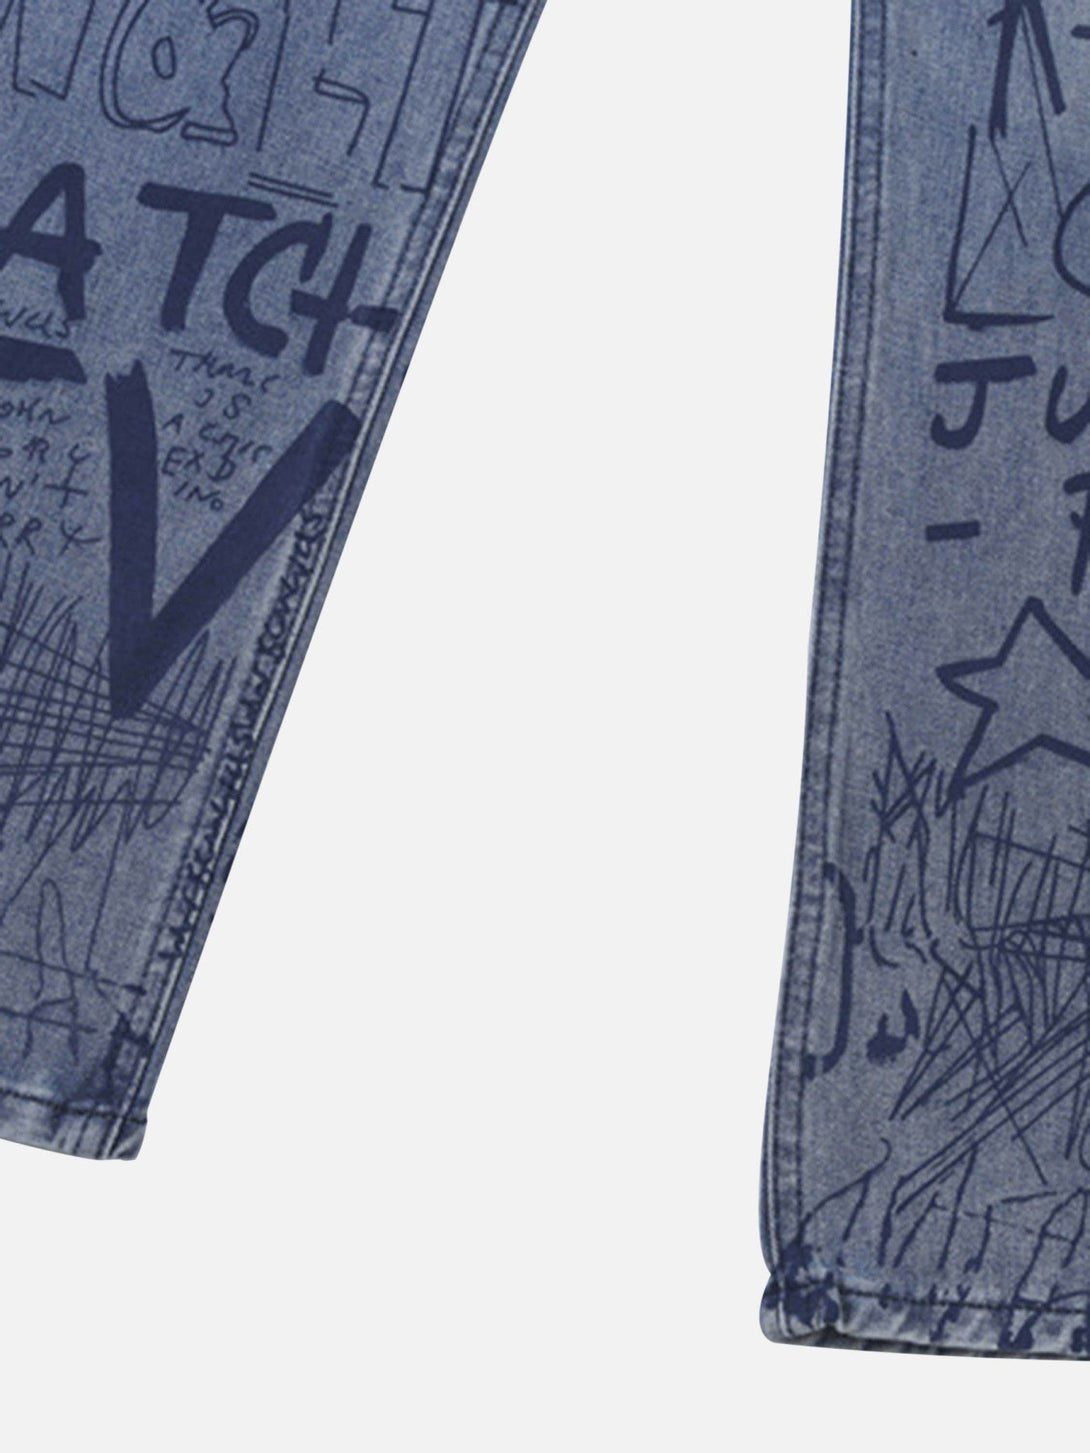 Majesda® - Hip-hop Graffiti Alphabet Jeans - 1743- Outfit Ideas - Streetwear Fashion - majesda.com